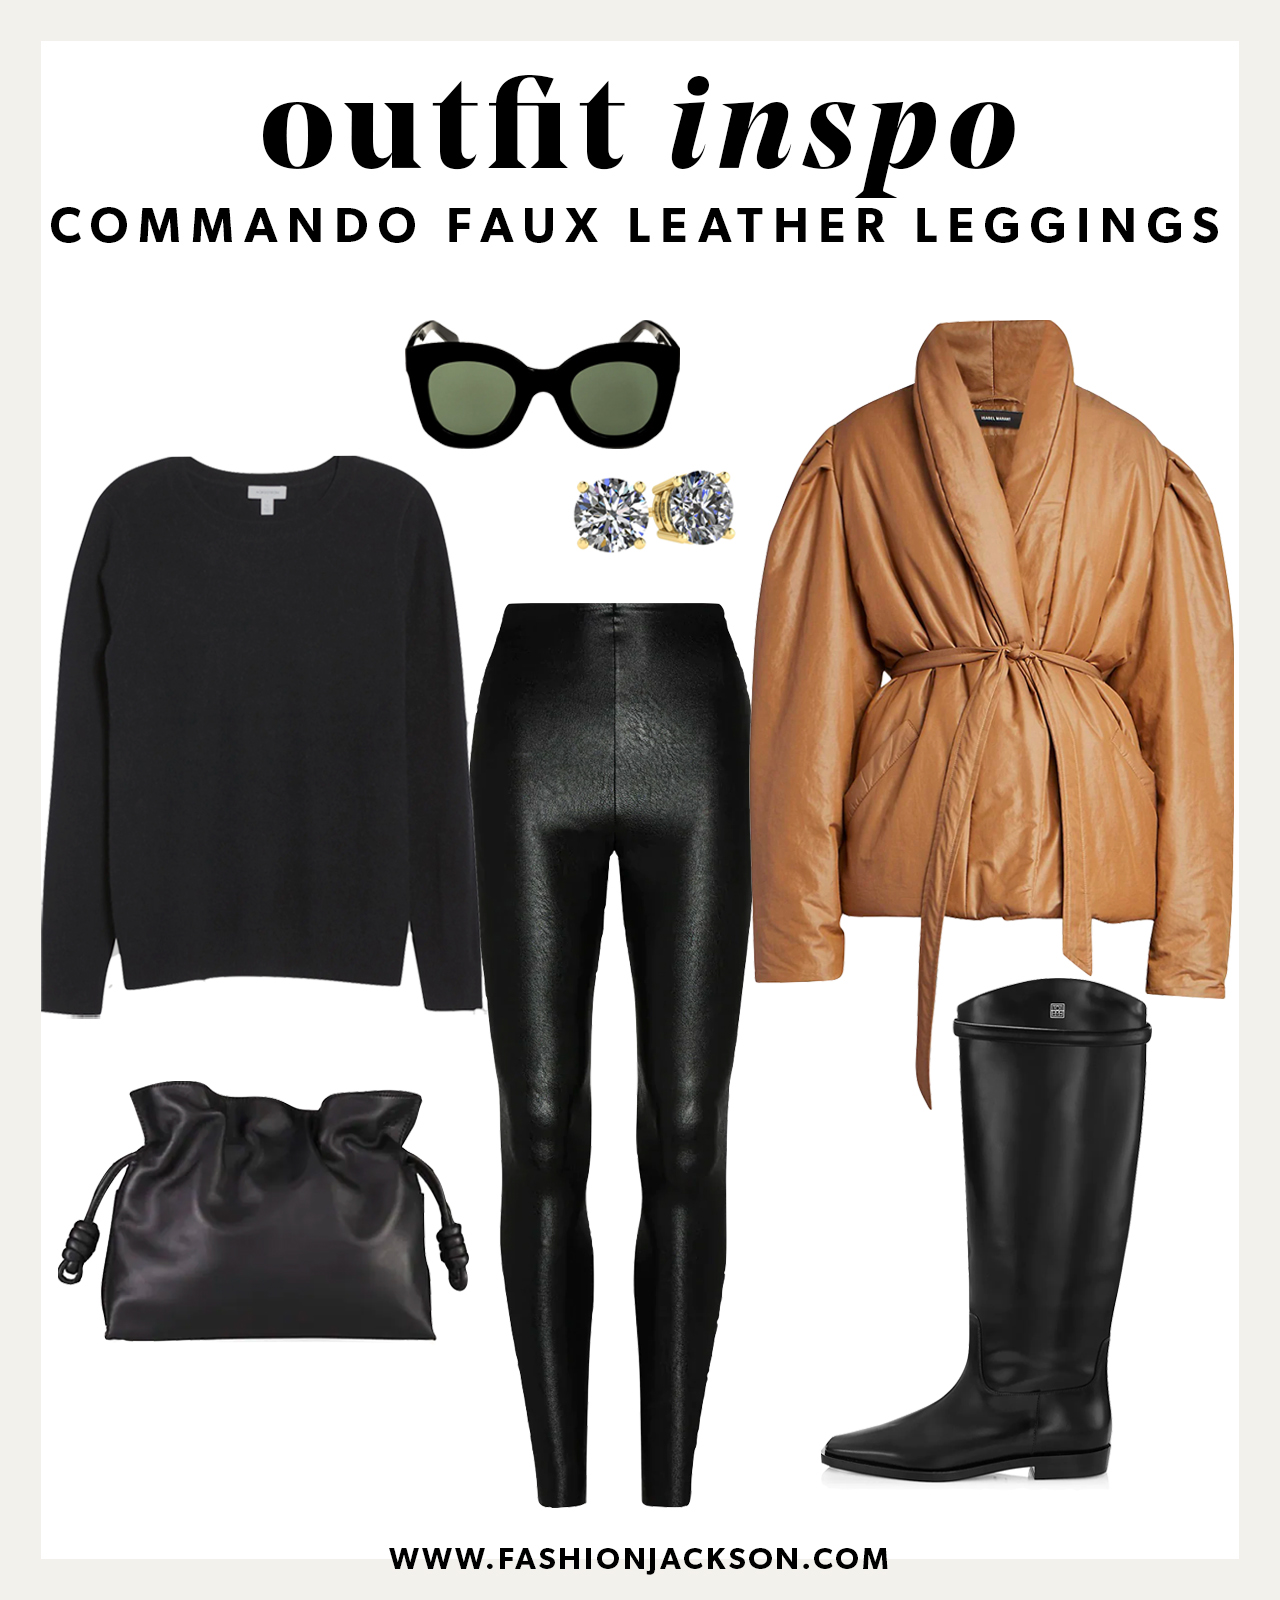 Leggings Commando Control Faux Leather  Outfits with leggings, Leather  leggings outfit, Faux leather leggings outfit